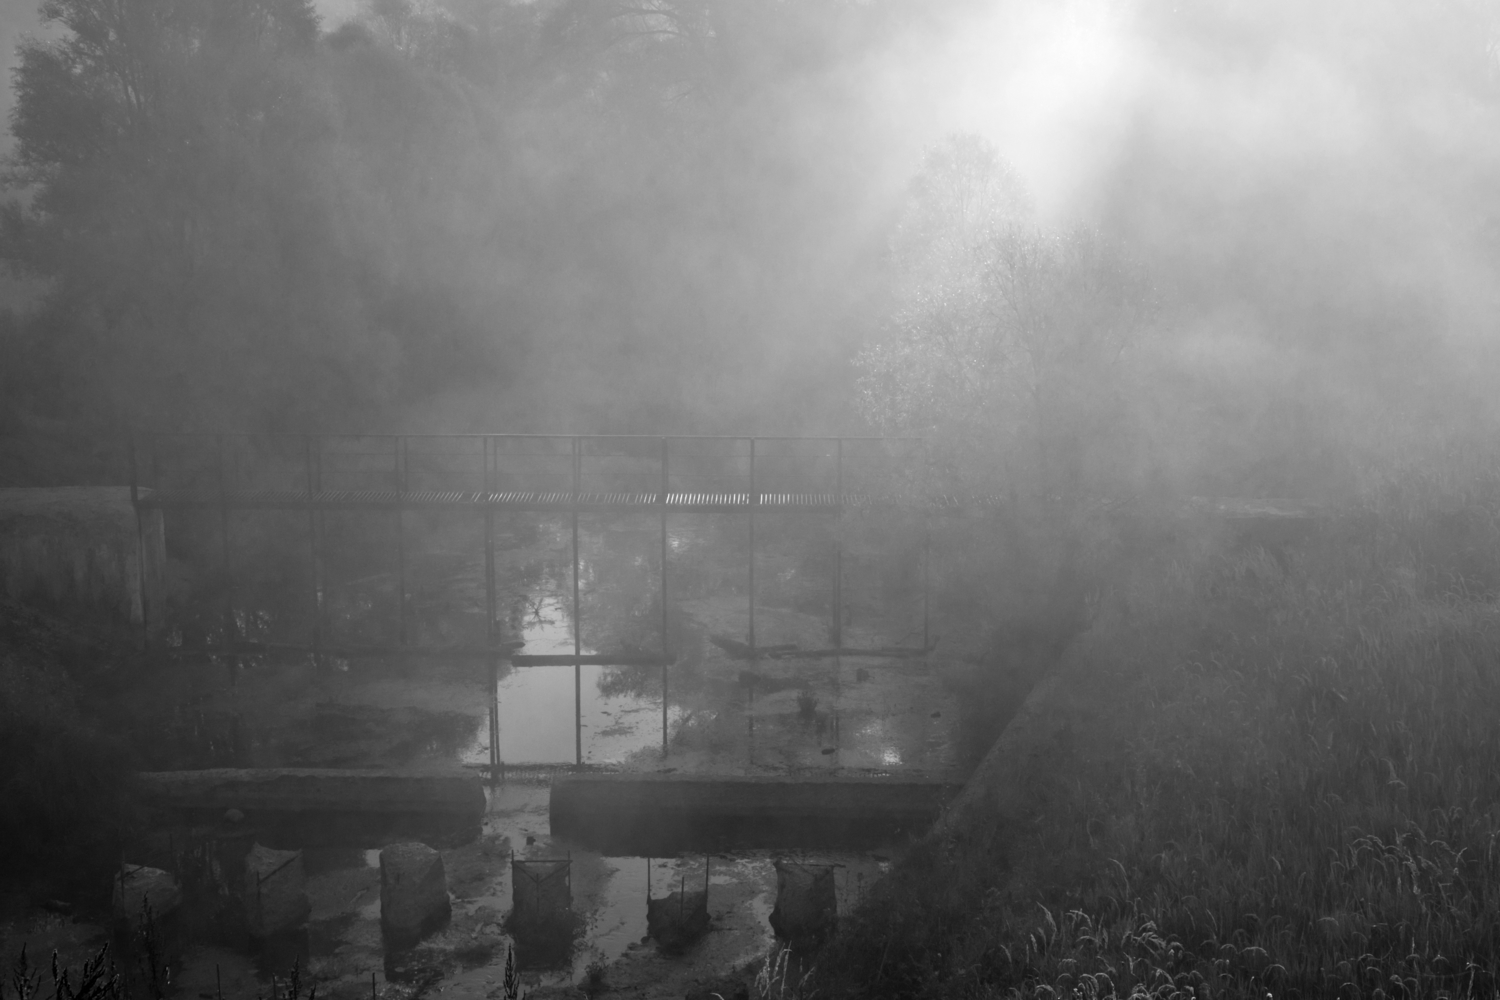 Мост в лучах и тумане